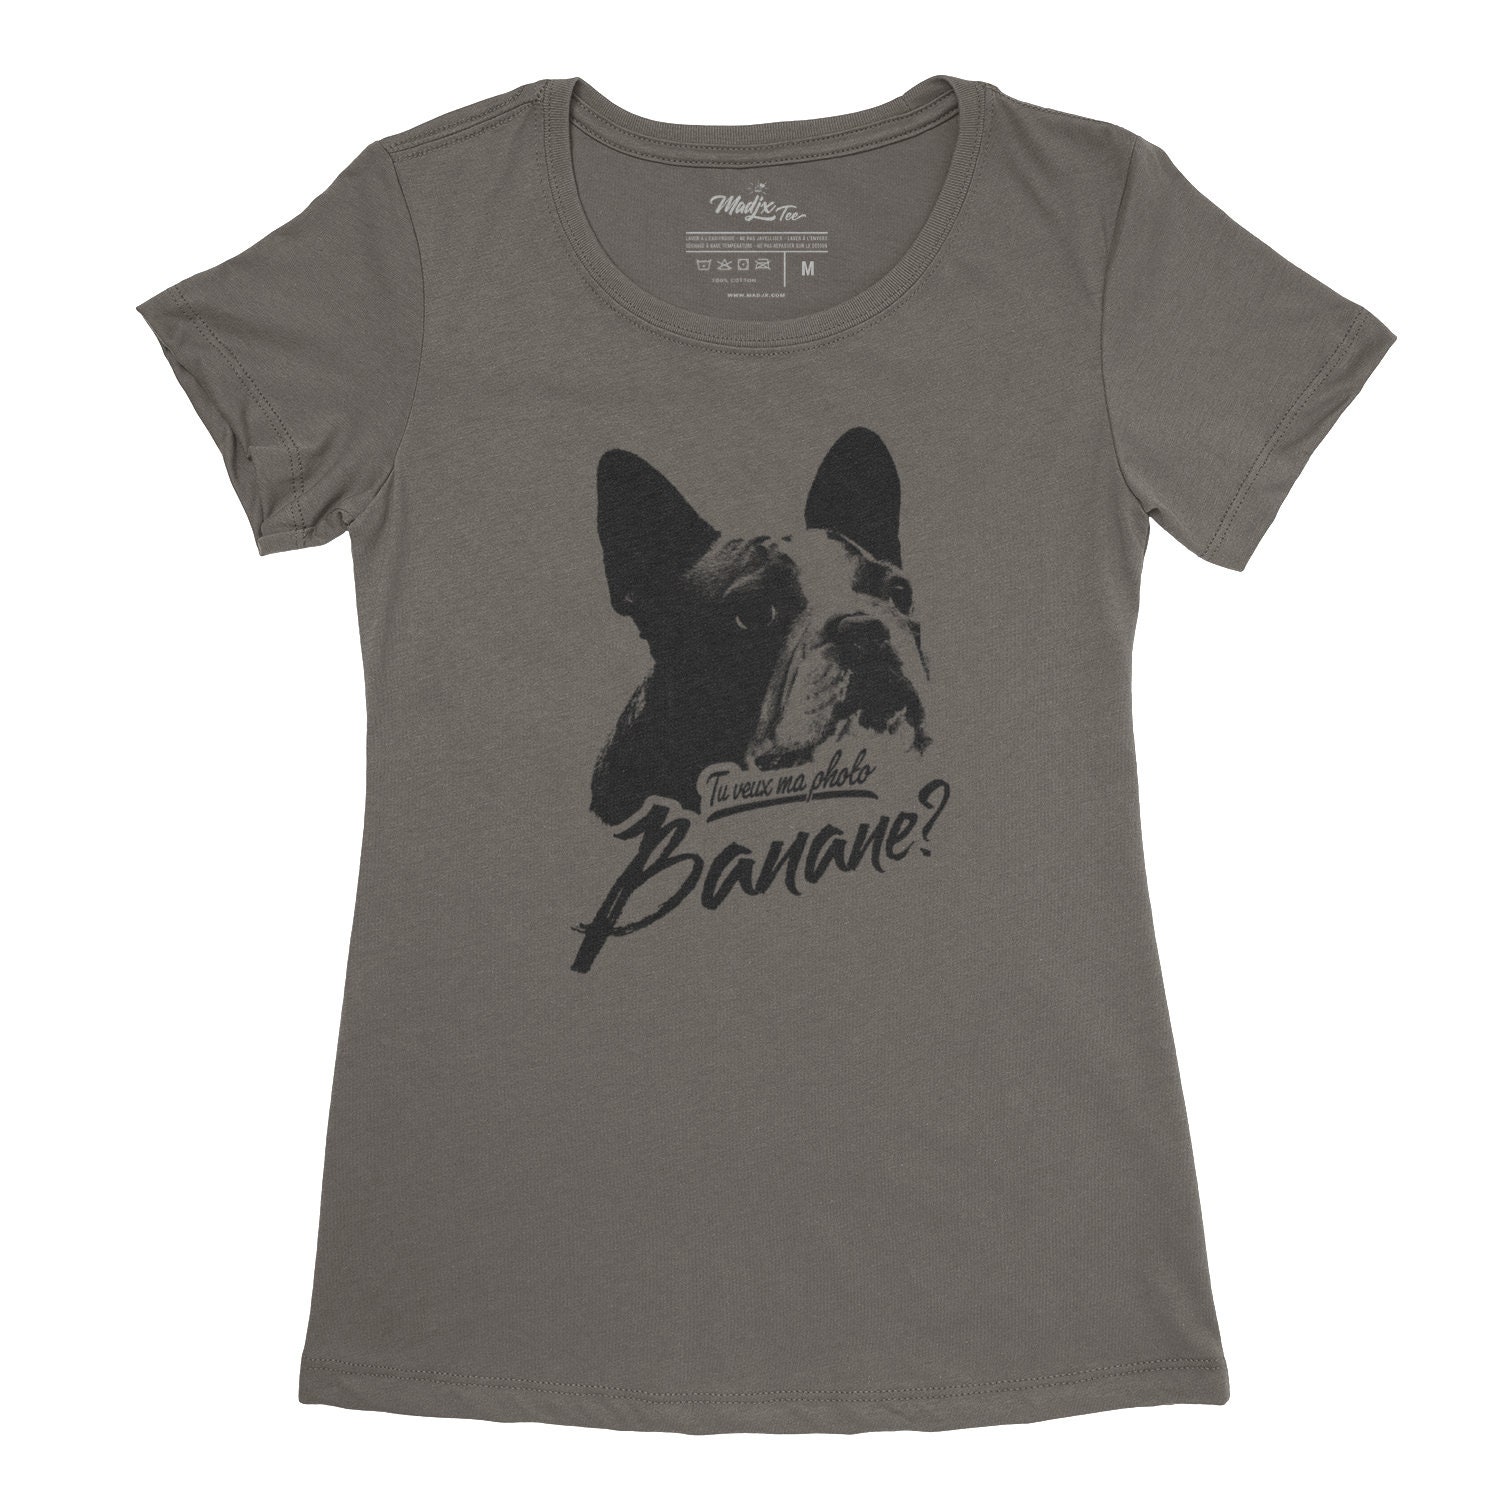 You want my photo BANANA tshirt for women dogs t-shirt Boston | Etsy